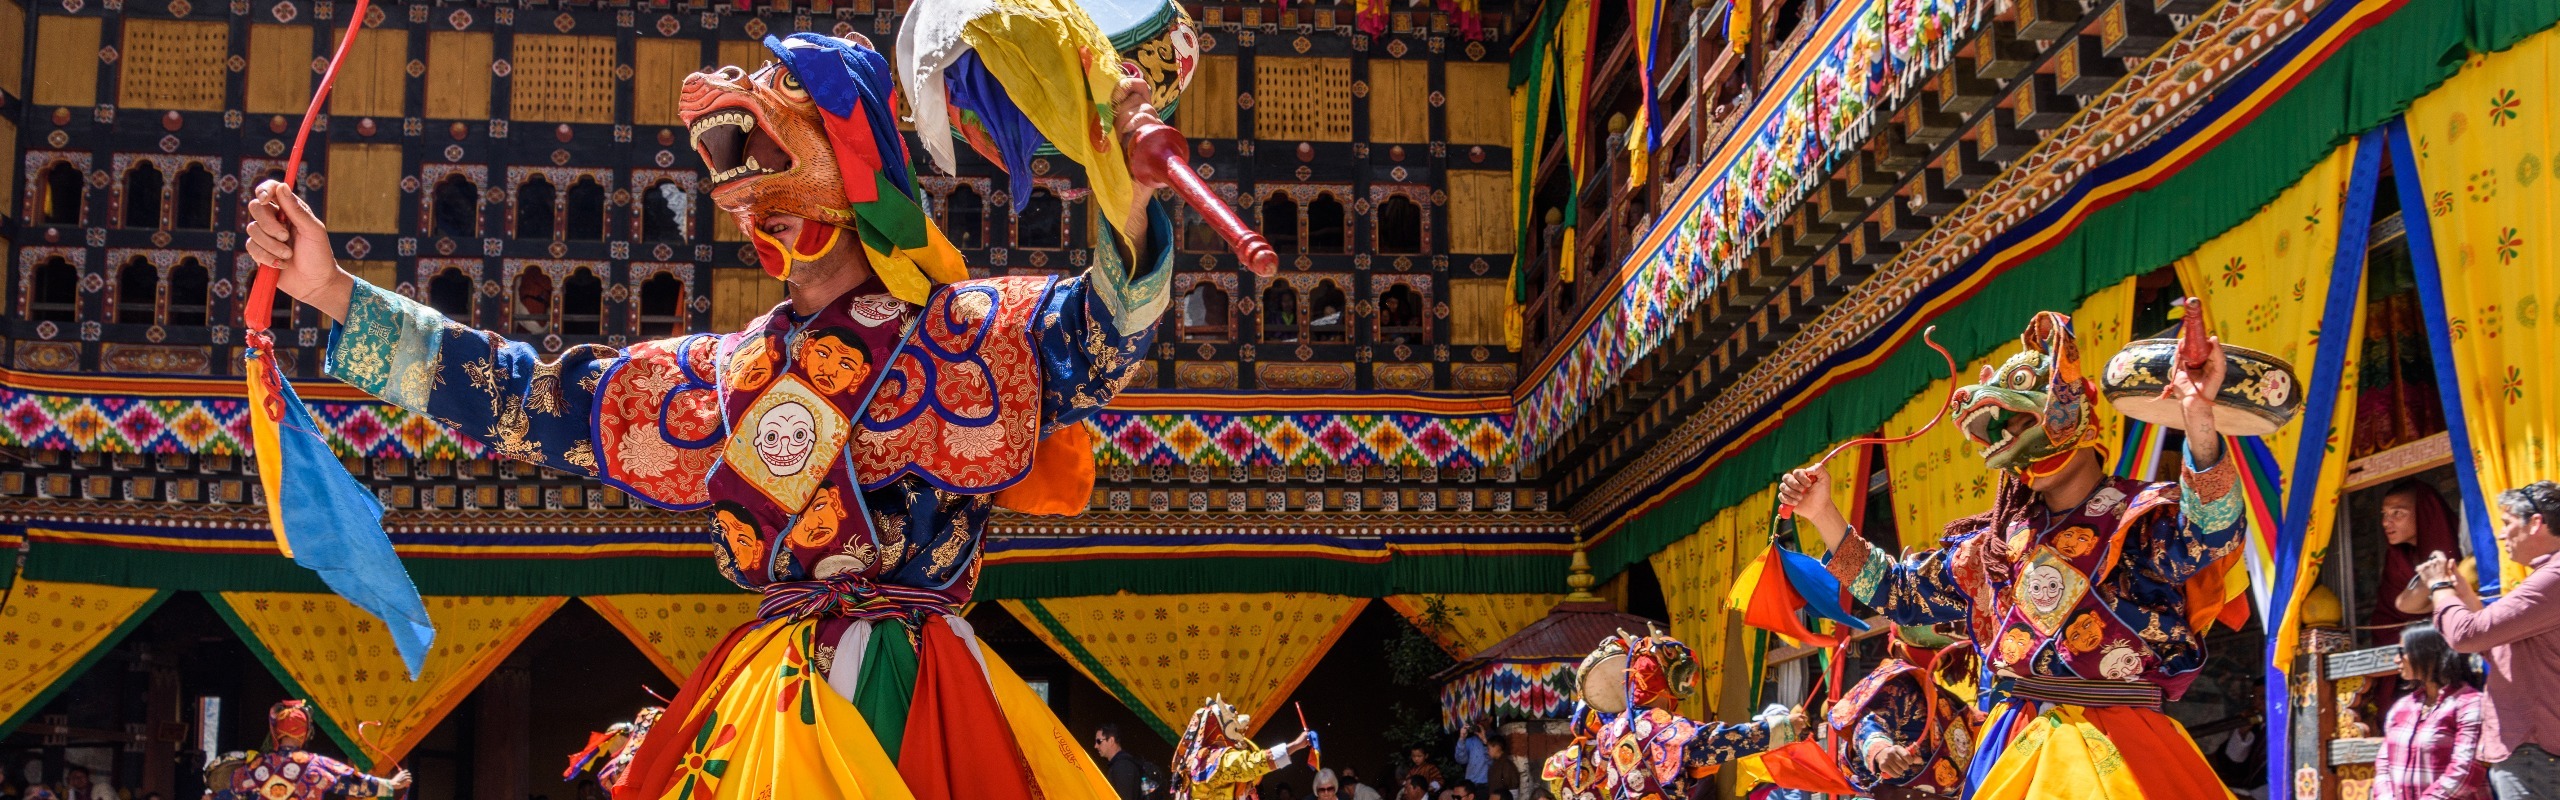 7-Day Premium Bhutan Tour